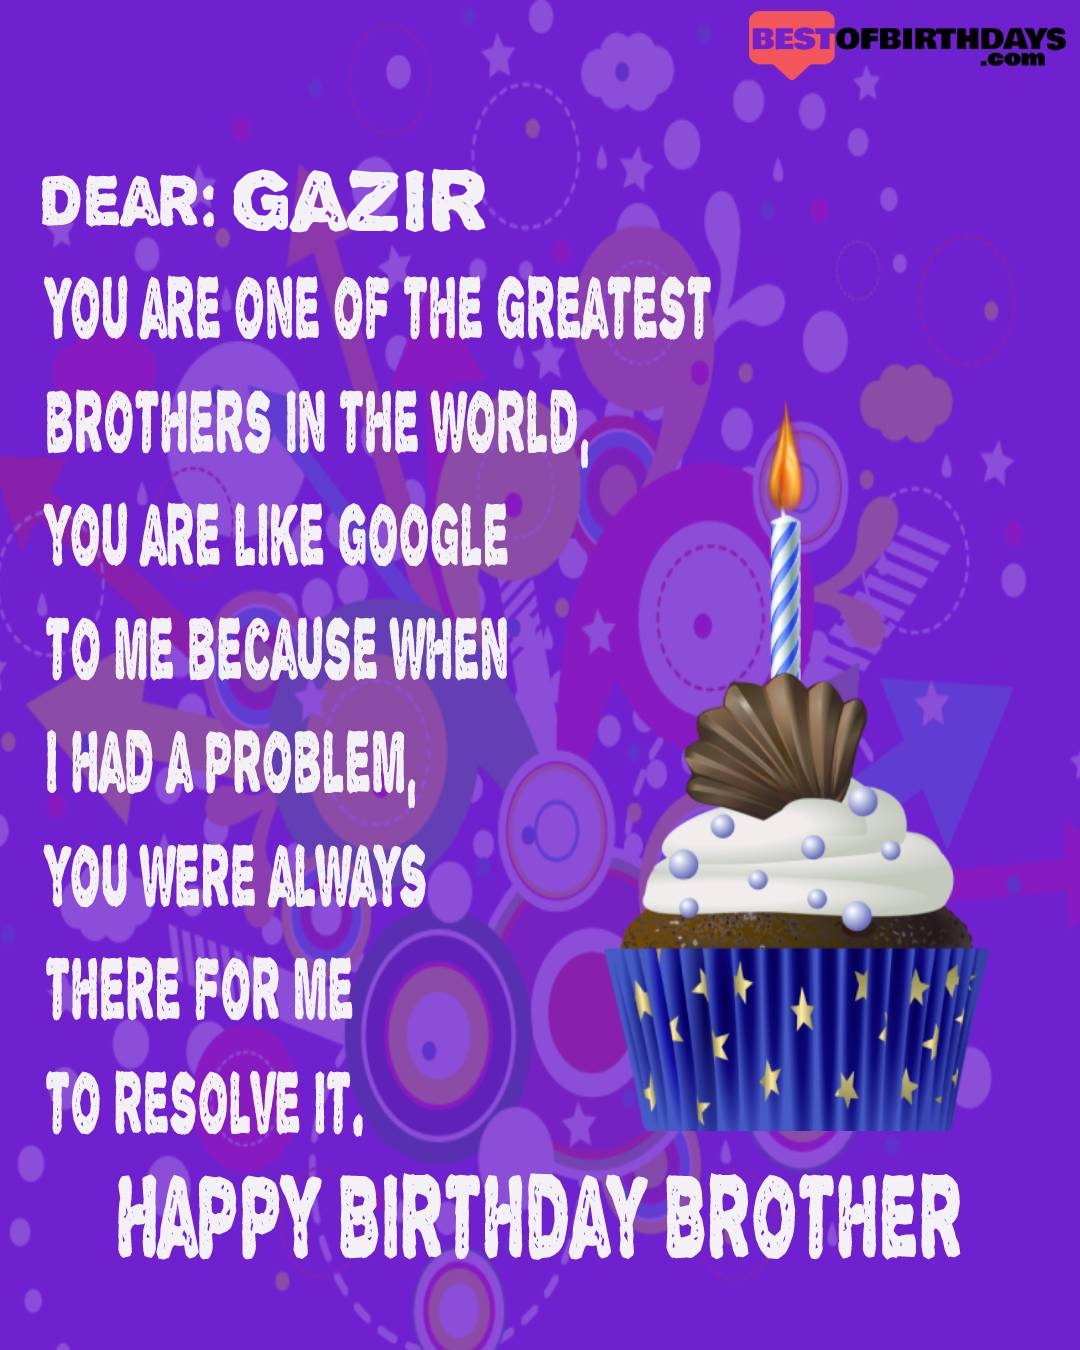 Happy birthday gazir bhai brother bro